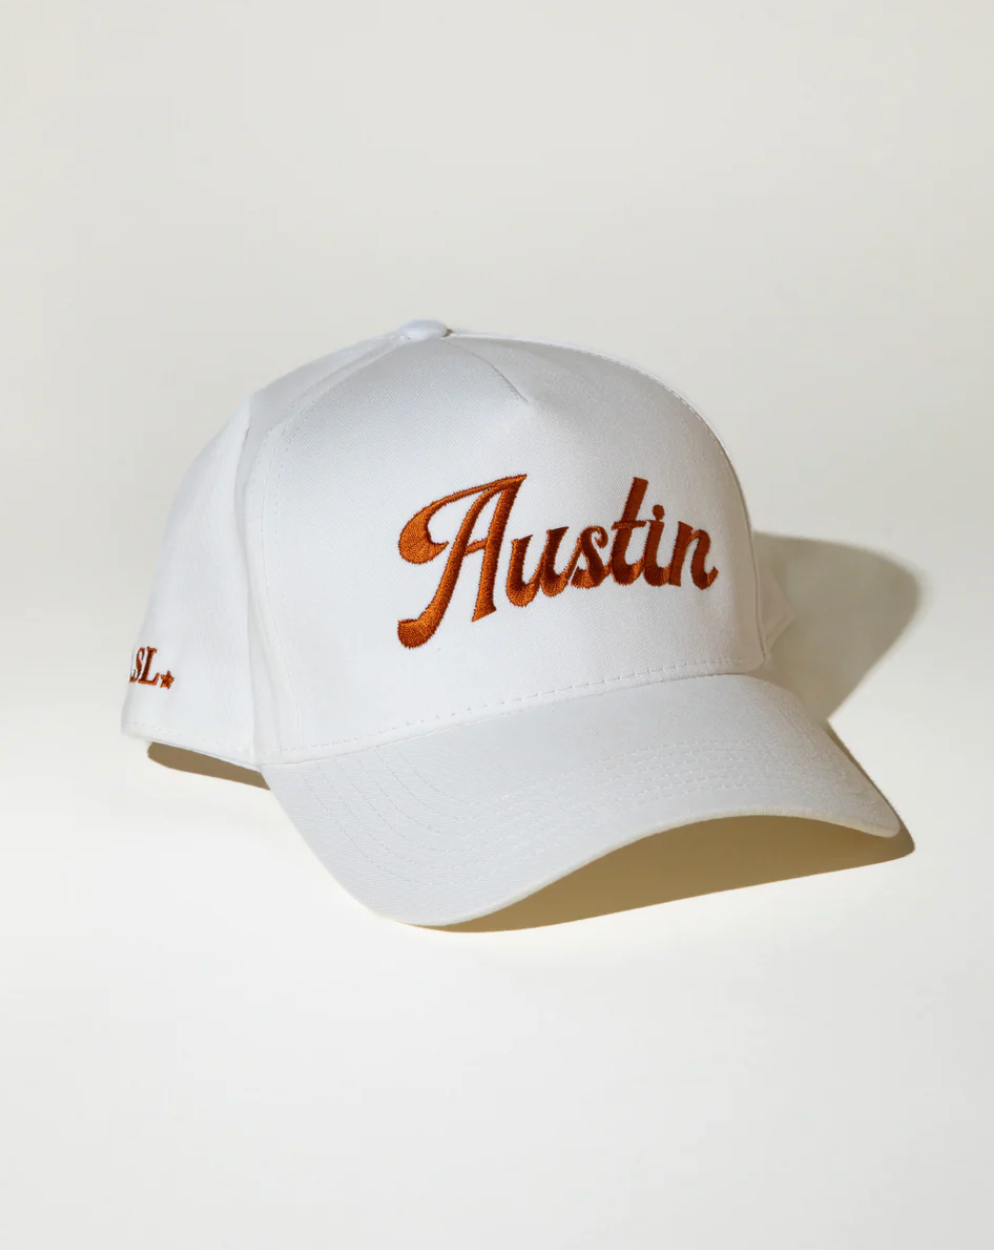 Longhorn "Austin" Canvas Trucker Hat